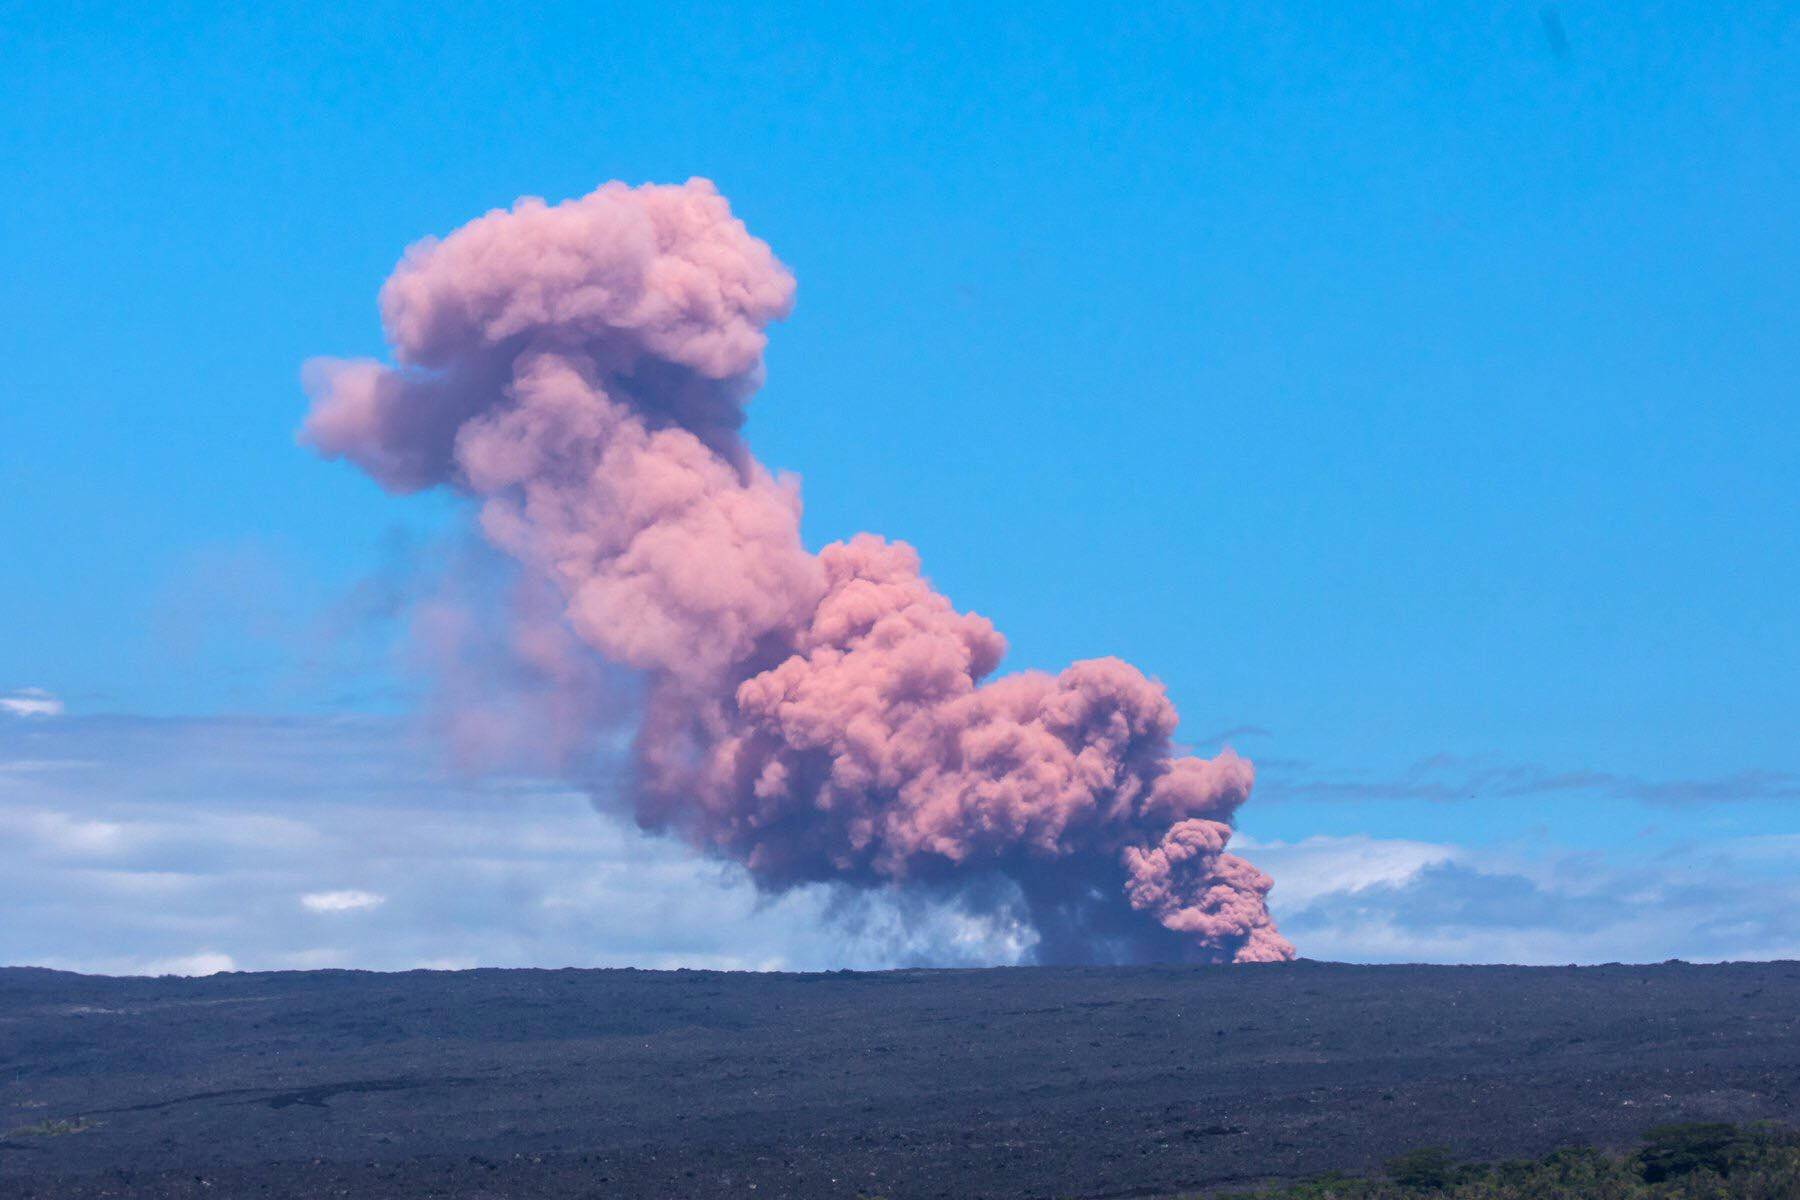 An ash cloud rises above Kilauea Volcano after it erupted, on Hawaii's Big Island